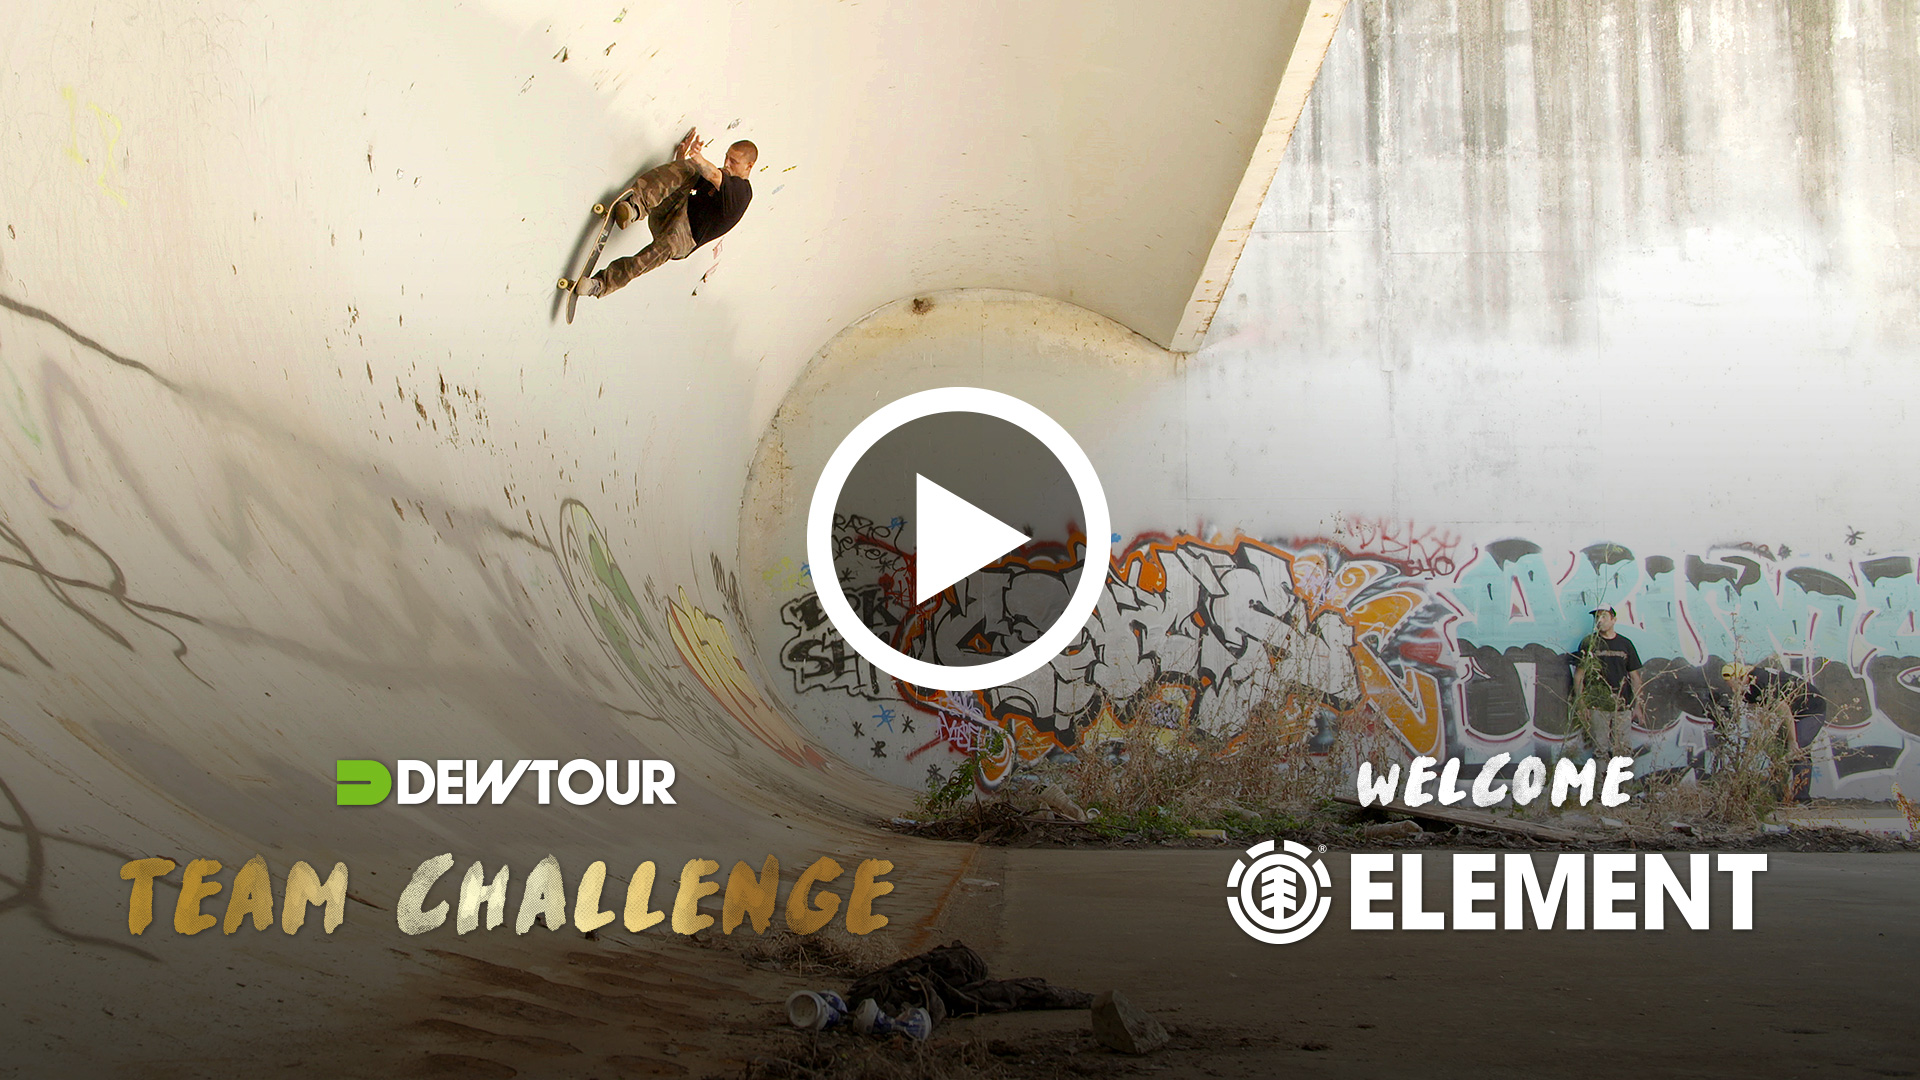 Dew Tour Team Challenge Element Skateboards Video Thumb